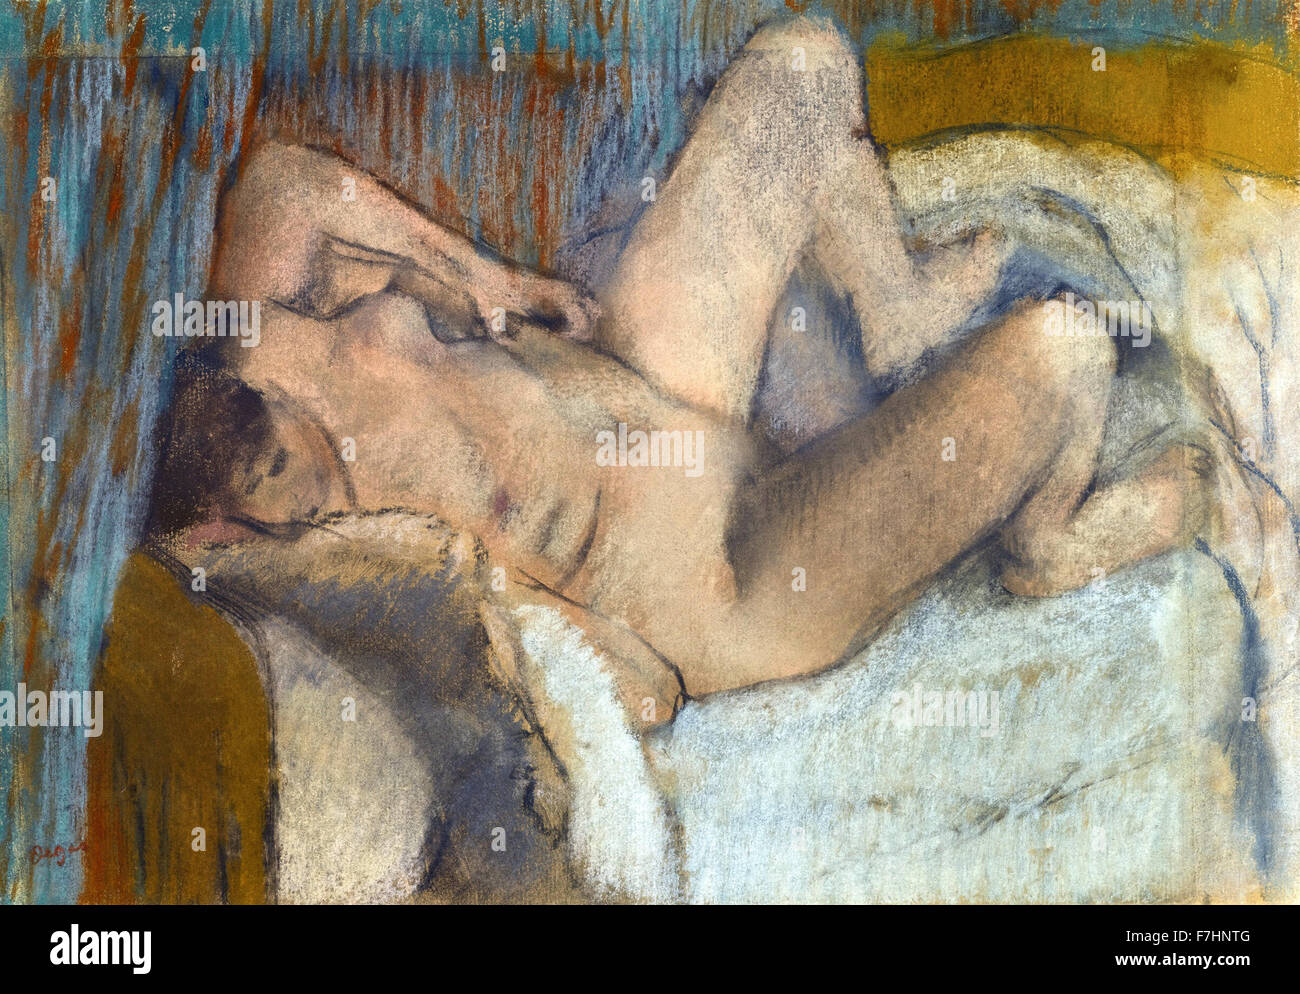 Edgar Degas - Femme nue couchée Photo Stock - Alamy